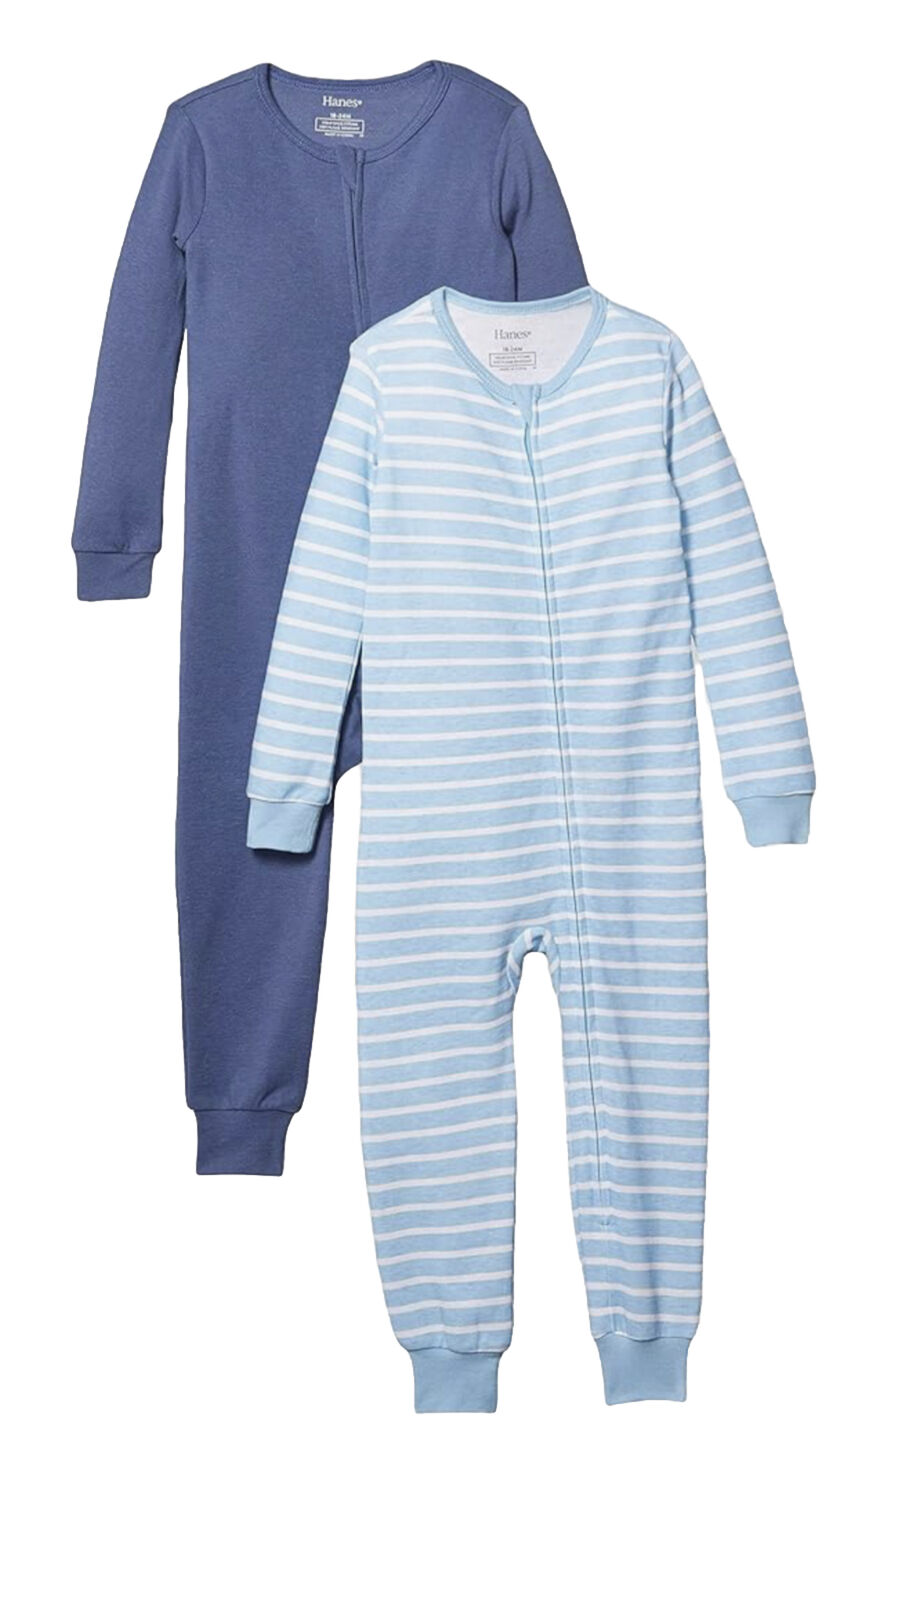 Hanes Baby Infant Pajama Boys & Girl 2 Pack Sleep Play Suit Bodysuit 18-24 Month